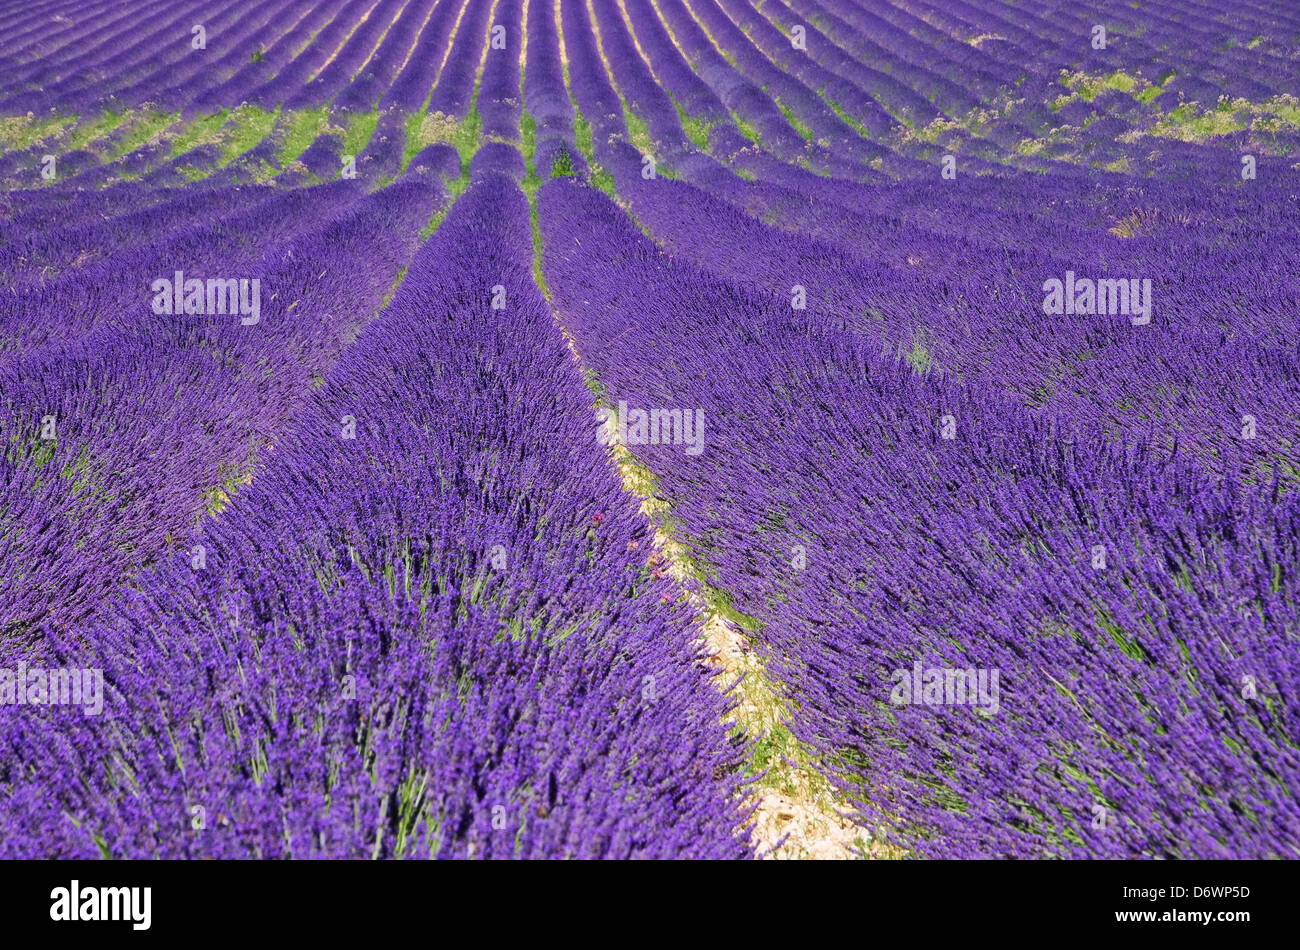 Lavendelfeld - lavender field 83 Stock Photo